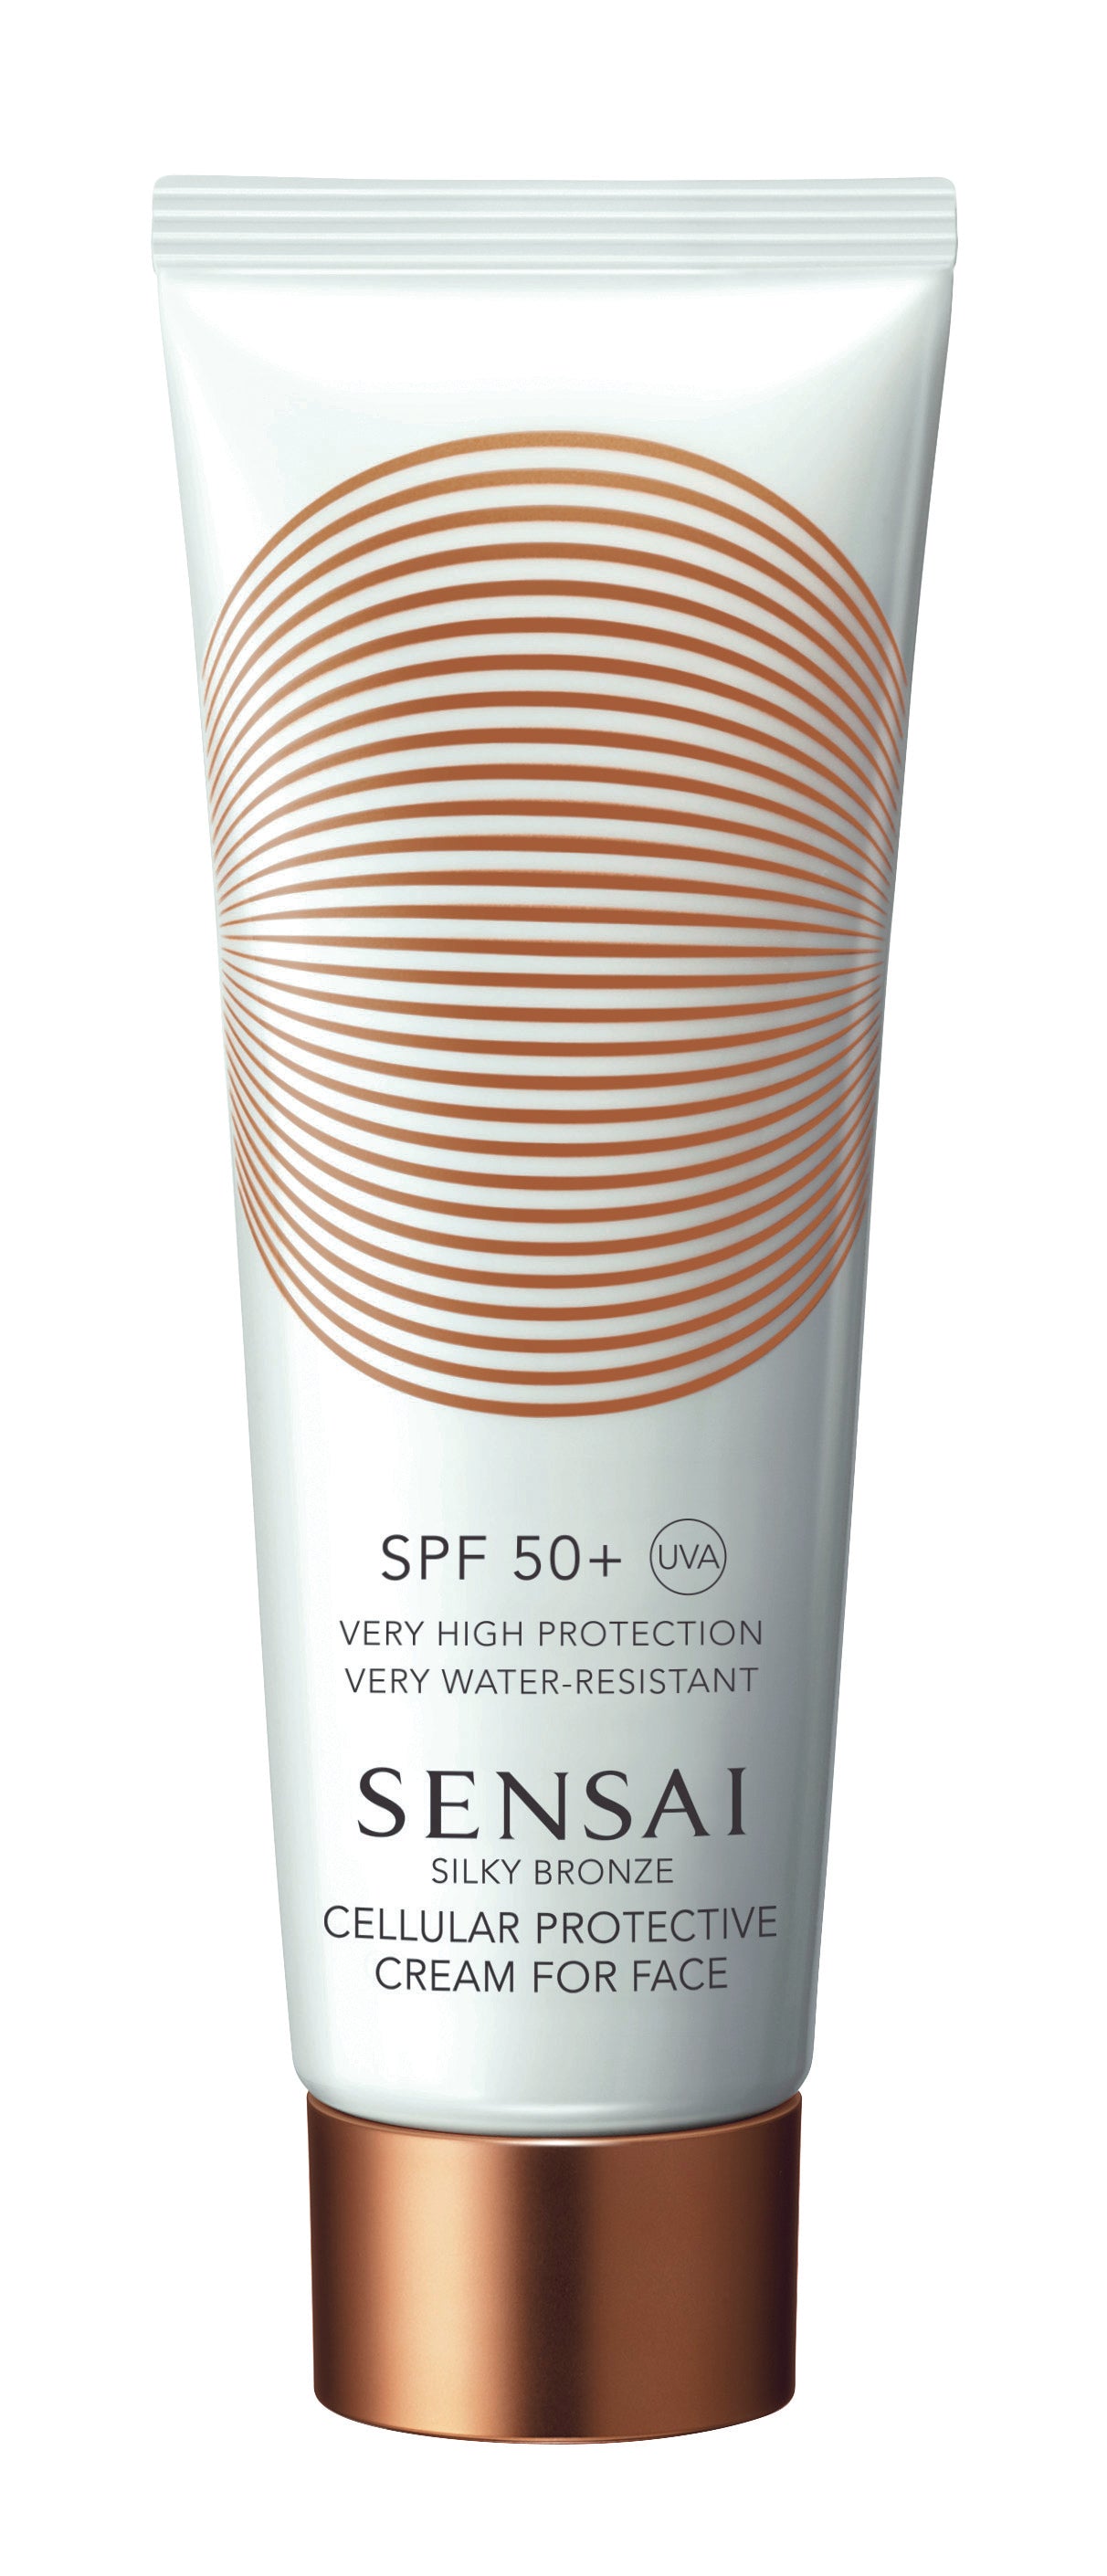 Sensai – Silky Bronze – Cellular Protective Cream For Face SPF50+ - Danae Profumeria